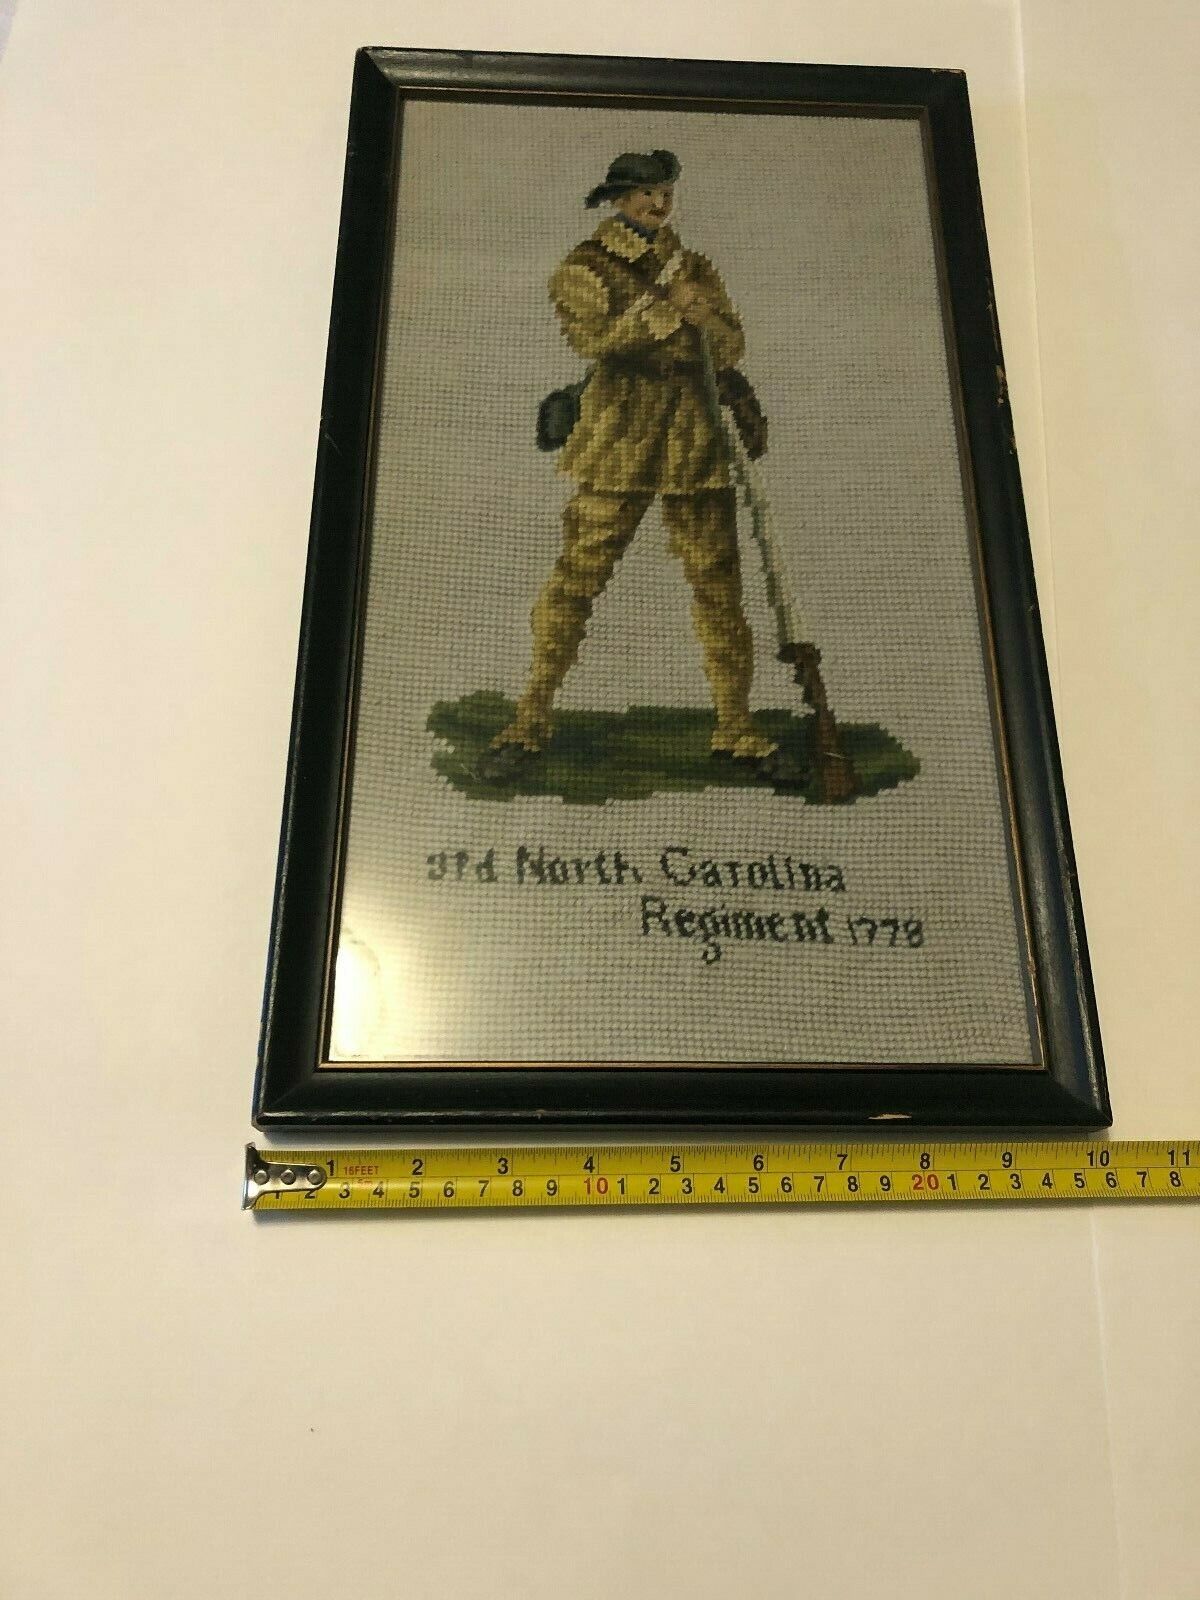 Vintage 3rd North Carolina Regiment Soldier 1778 Needlepoint Artwork under glass